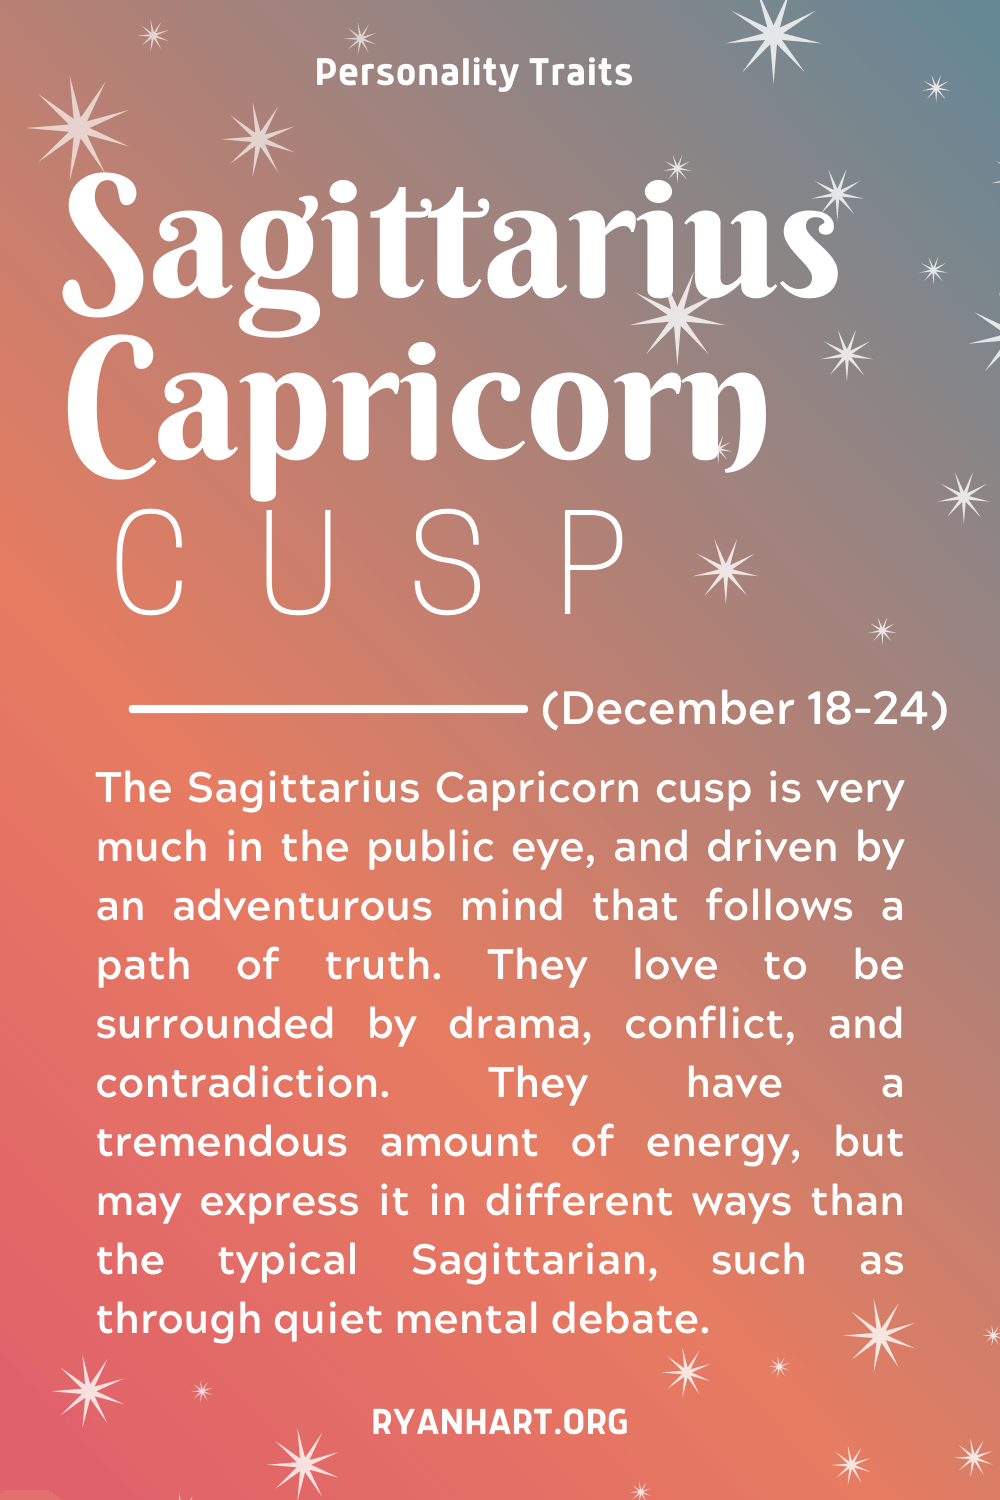  Sagittarius Capricorn Cusp Nodweddion Personoliaeth